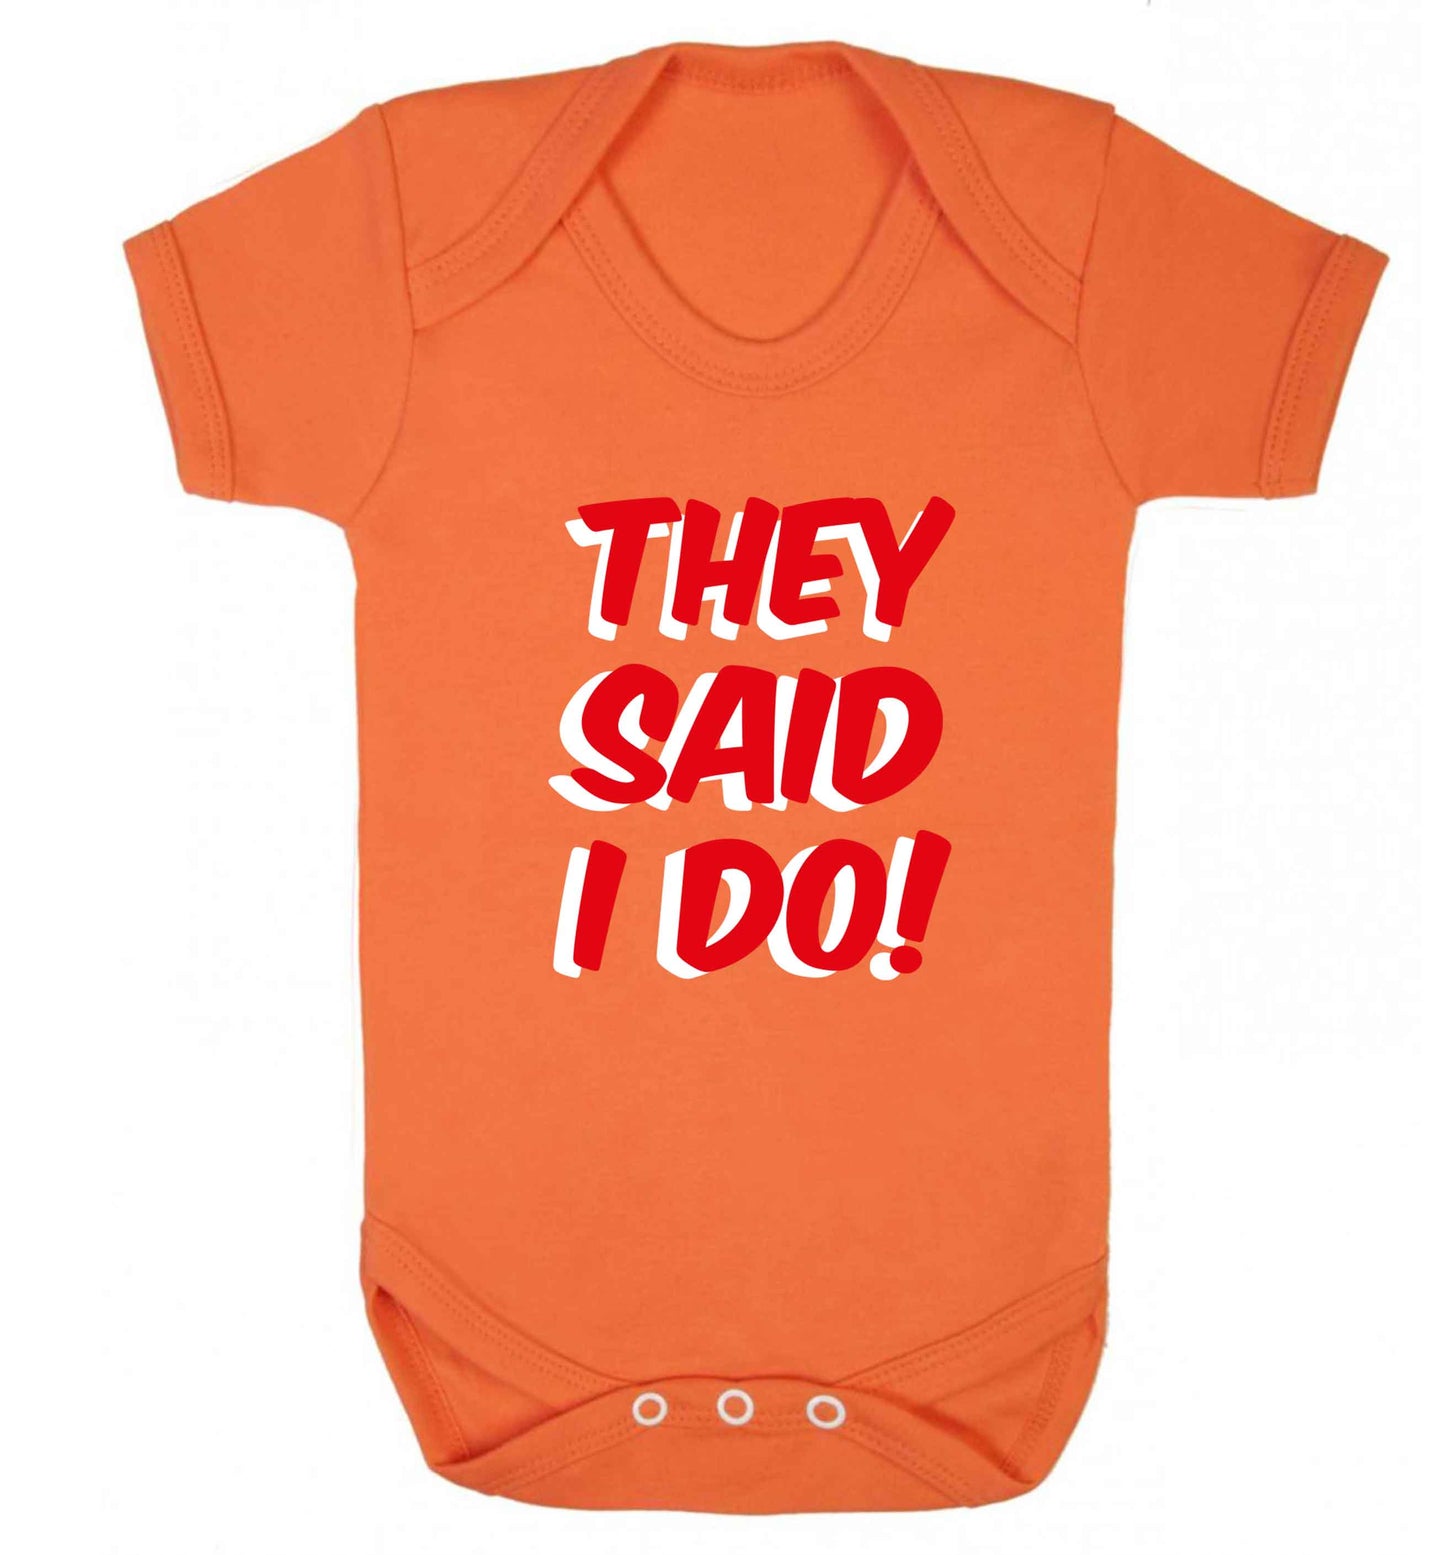 They said I do baby vest orange 18-24 months